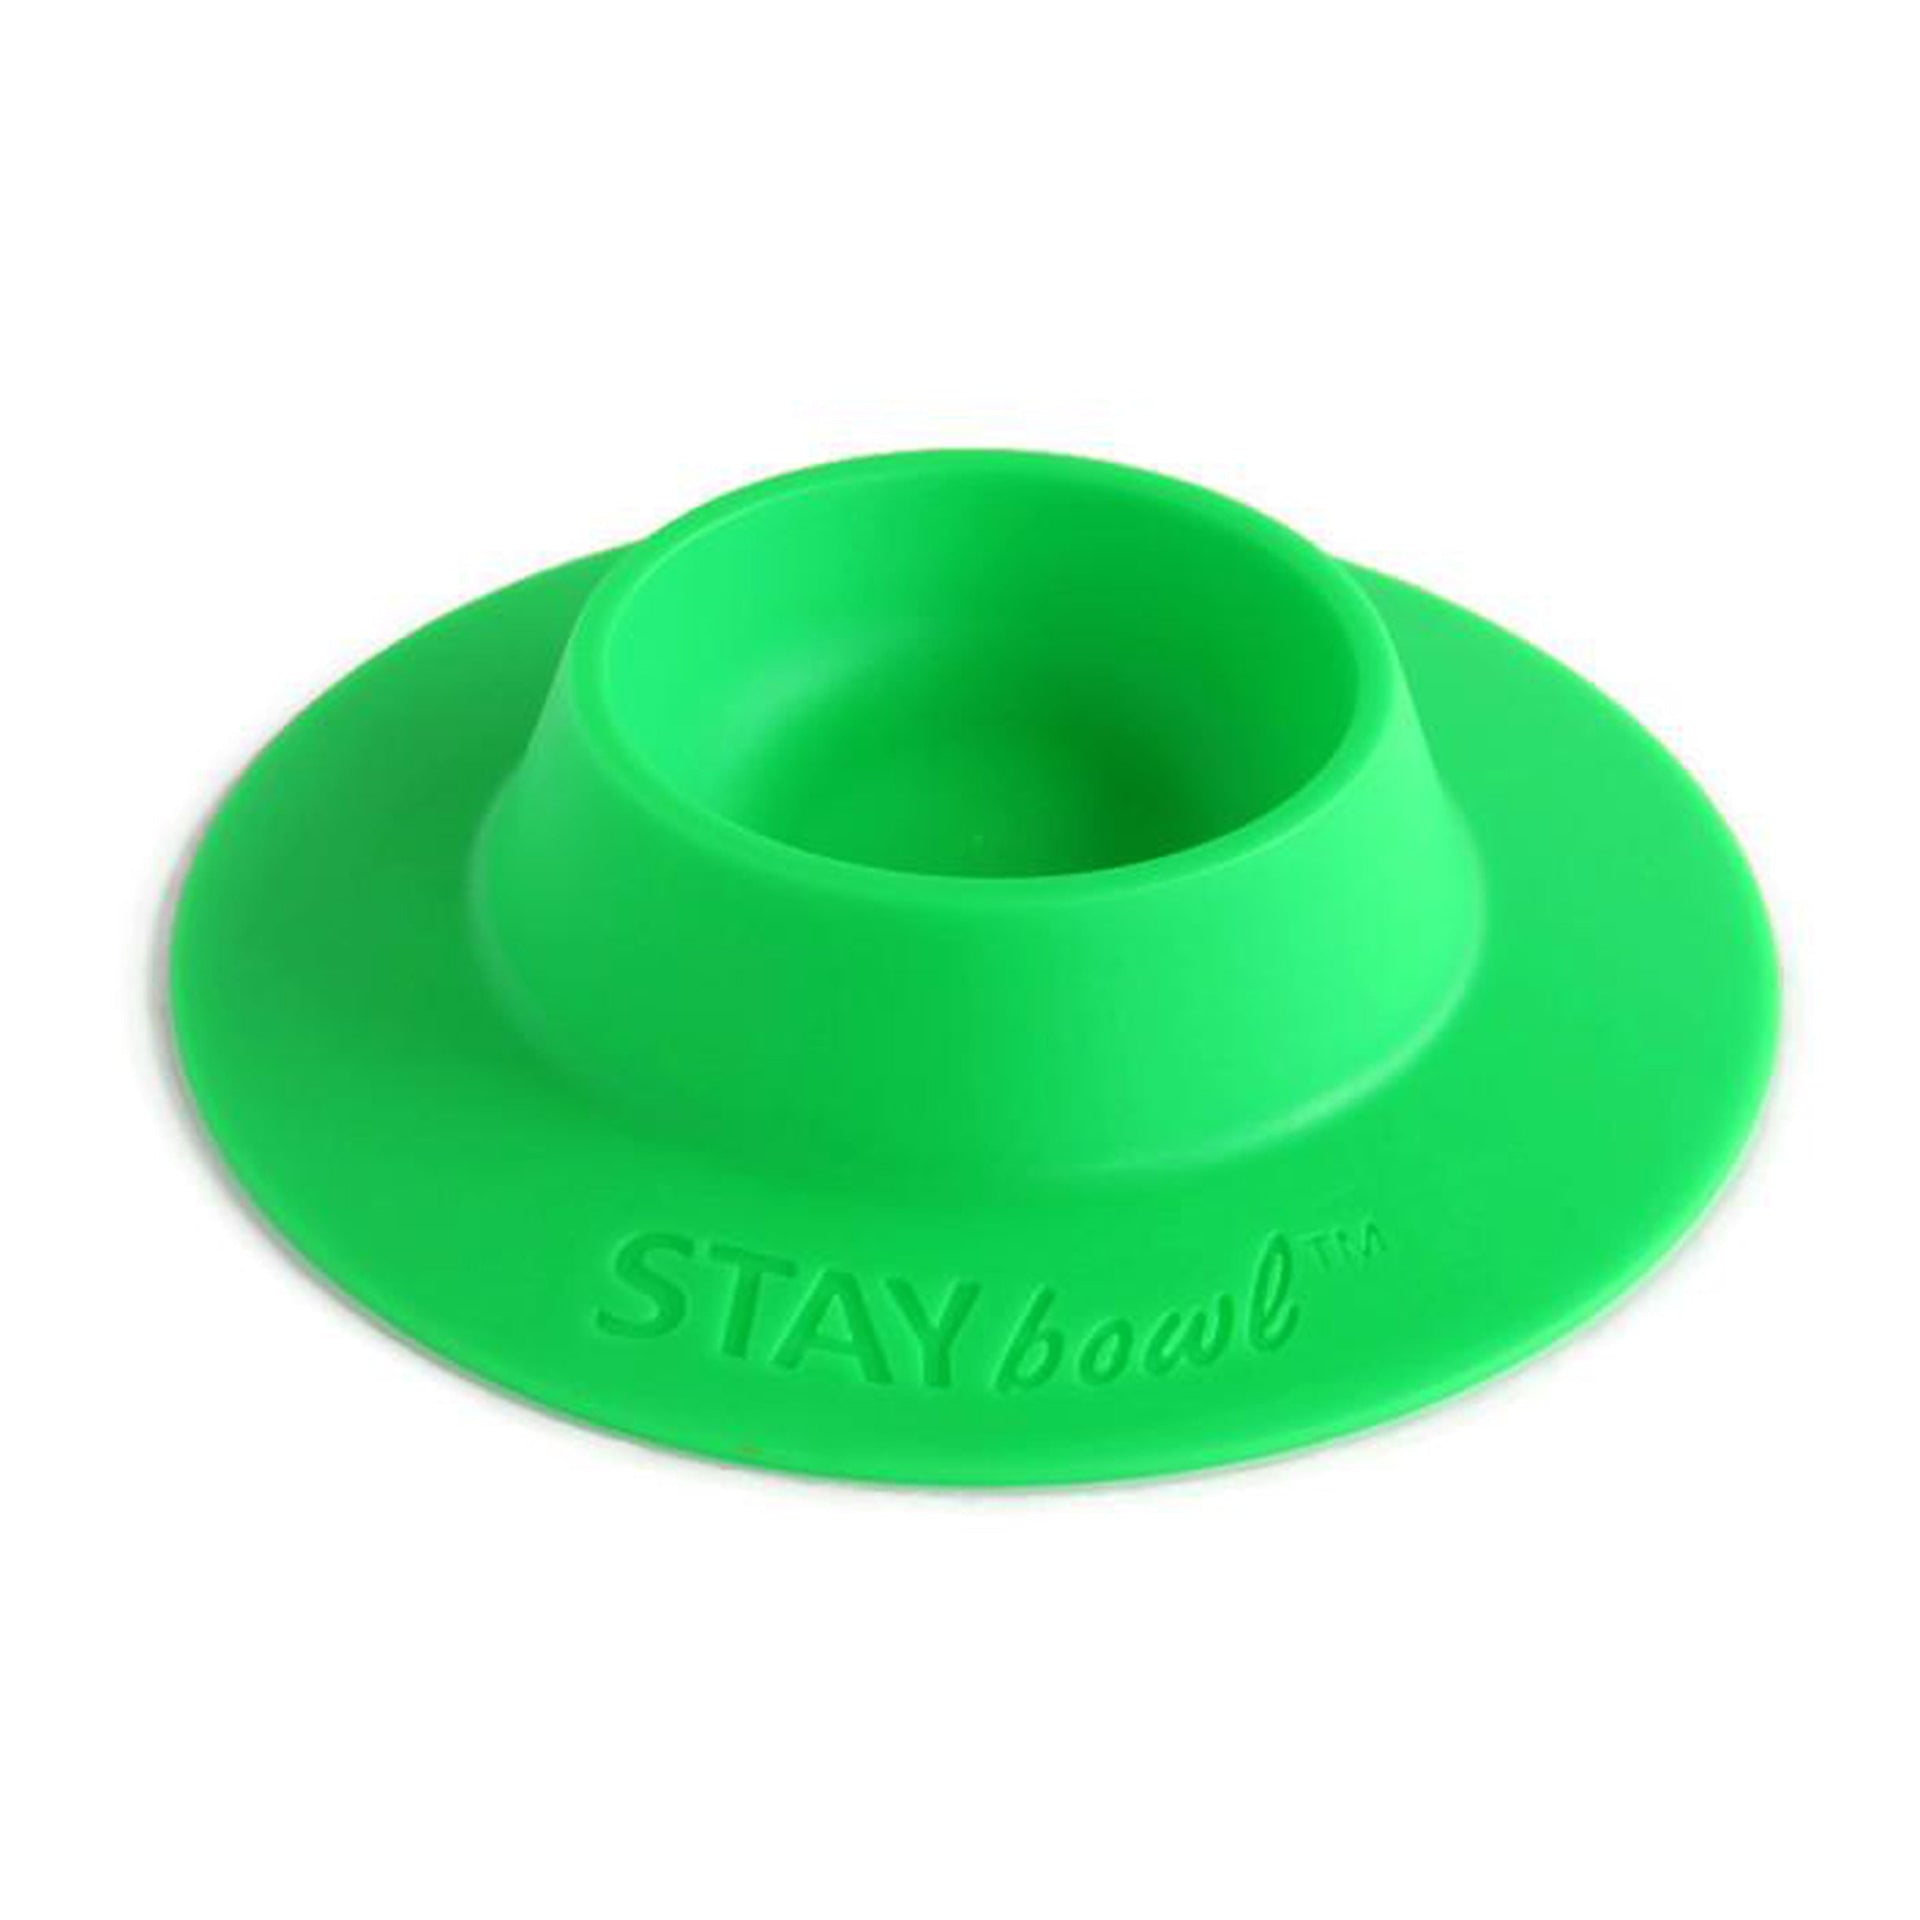 STAYbowl® Tip-proof Food Bowl